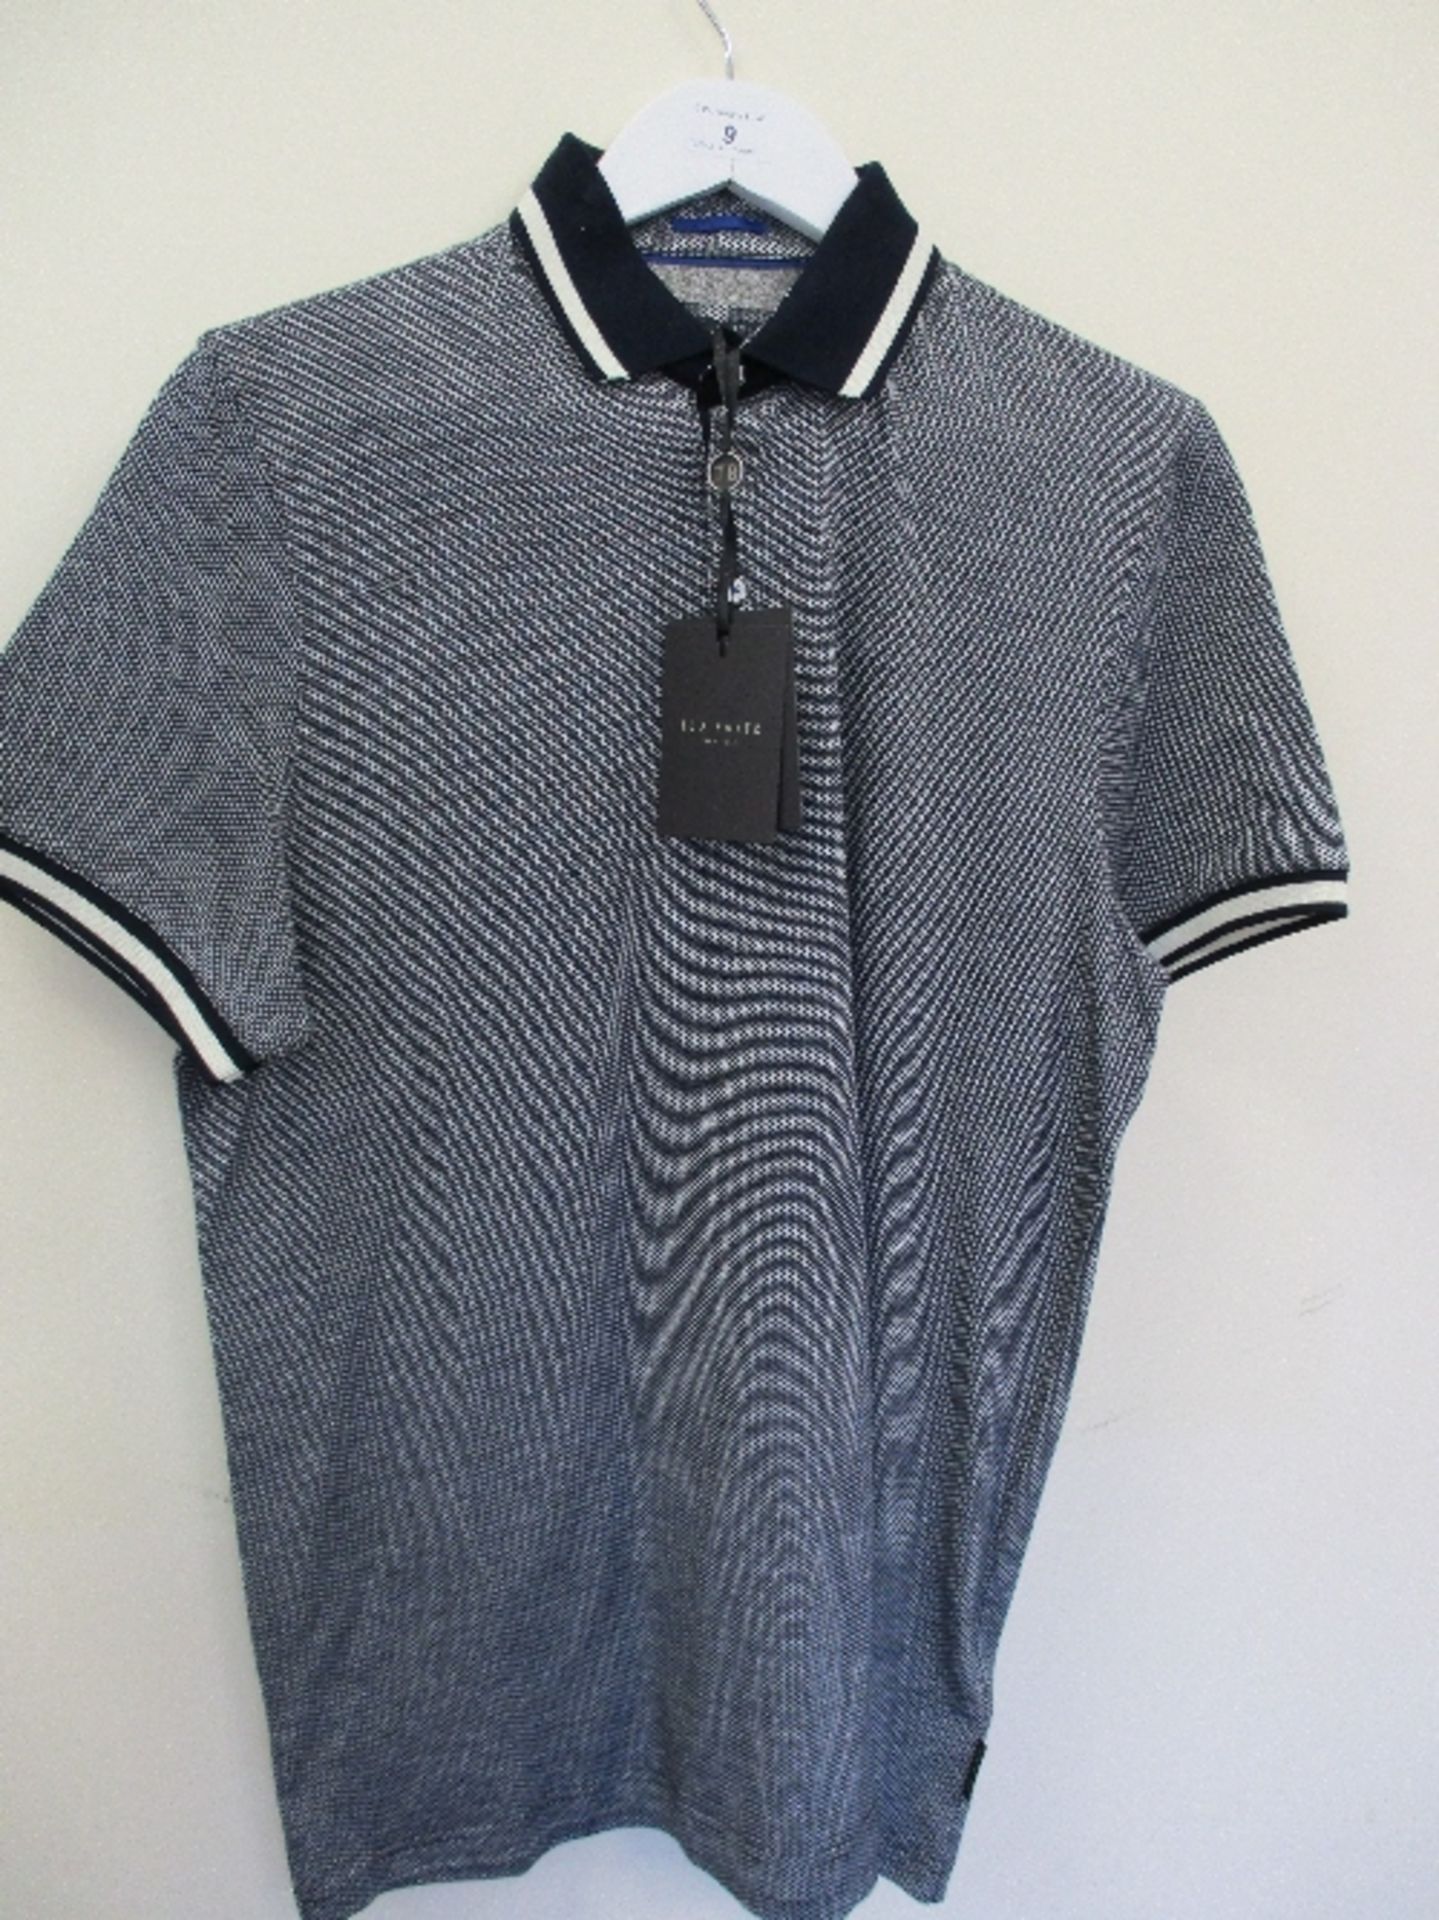 Ted Baker polo shirt - navy - medium RRP £69